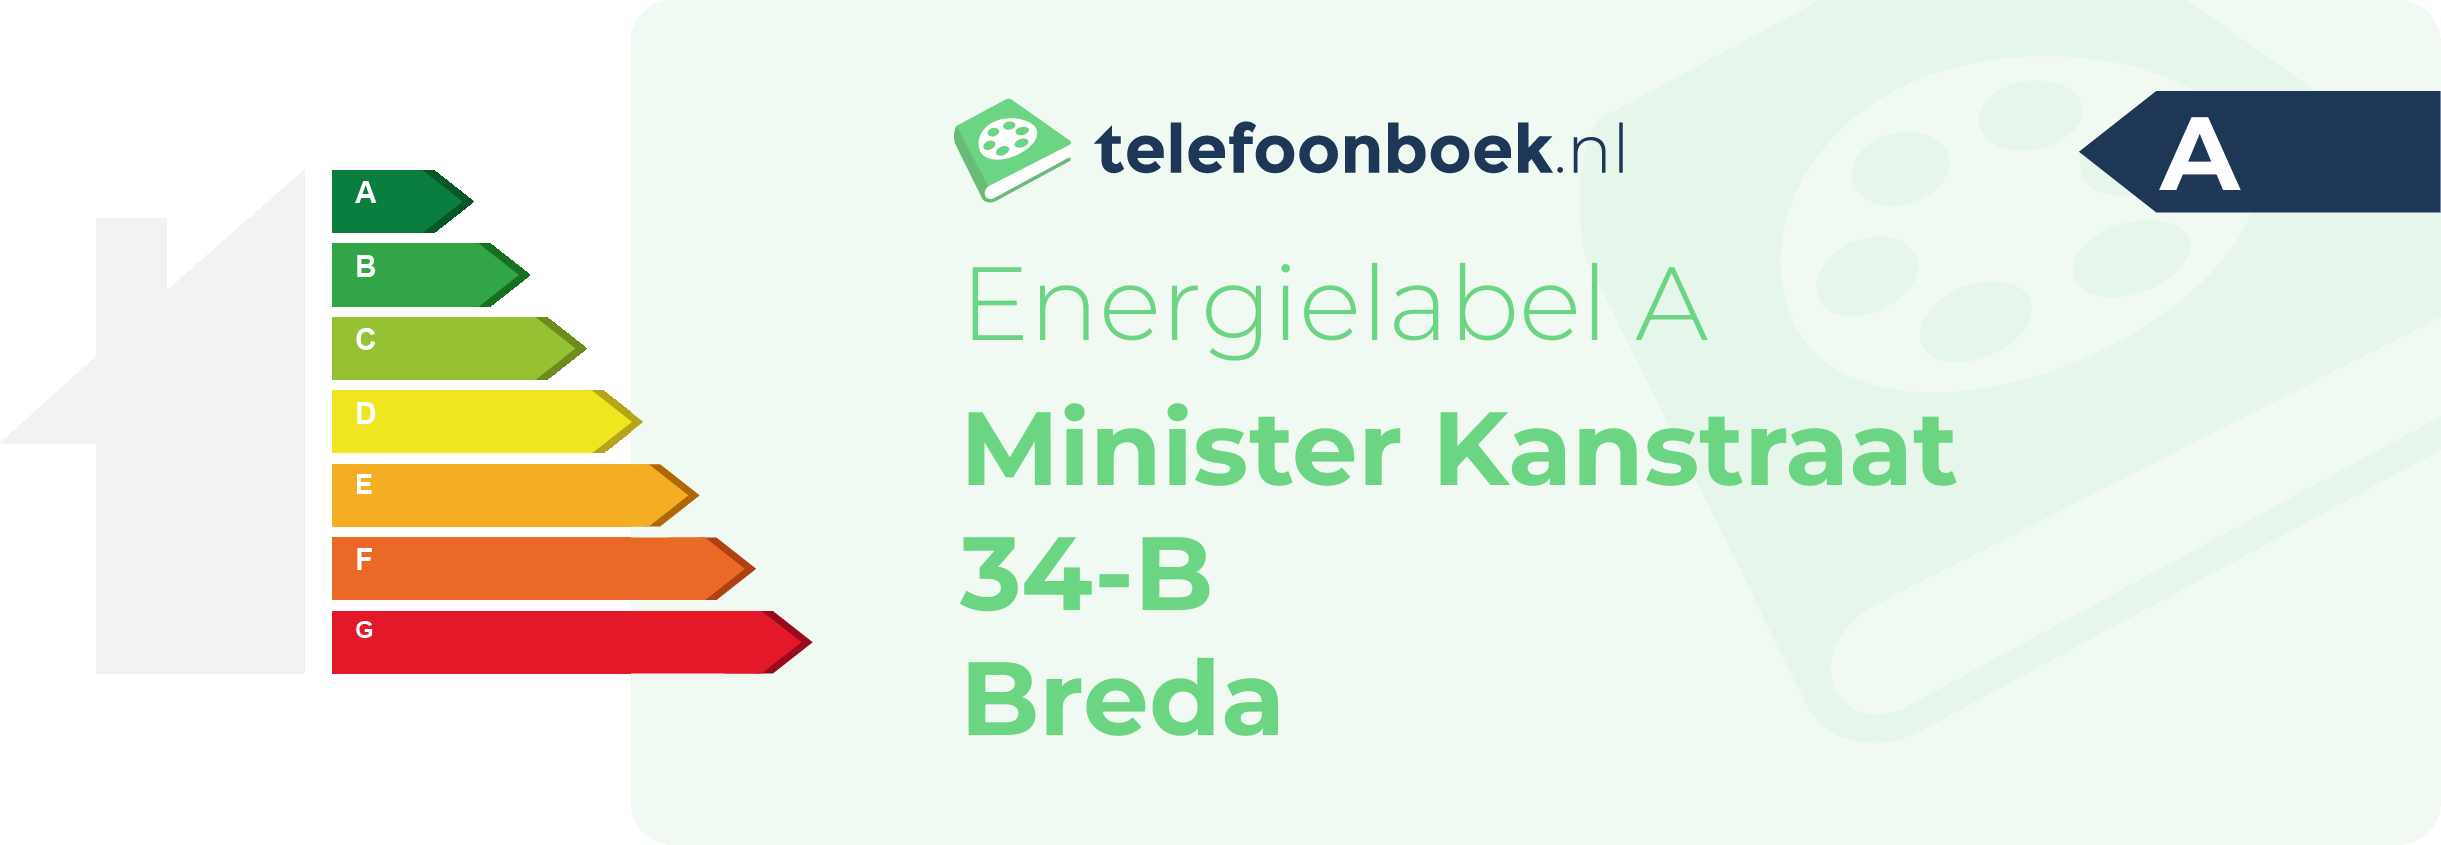 Energielabel Minister Kanstraat 34-B Breda